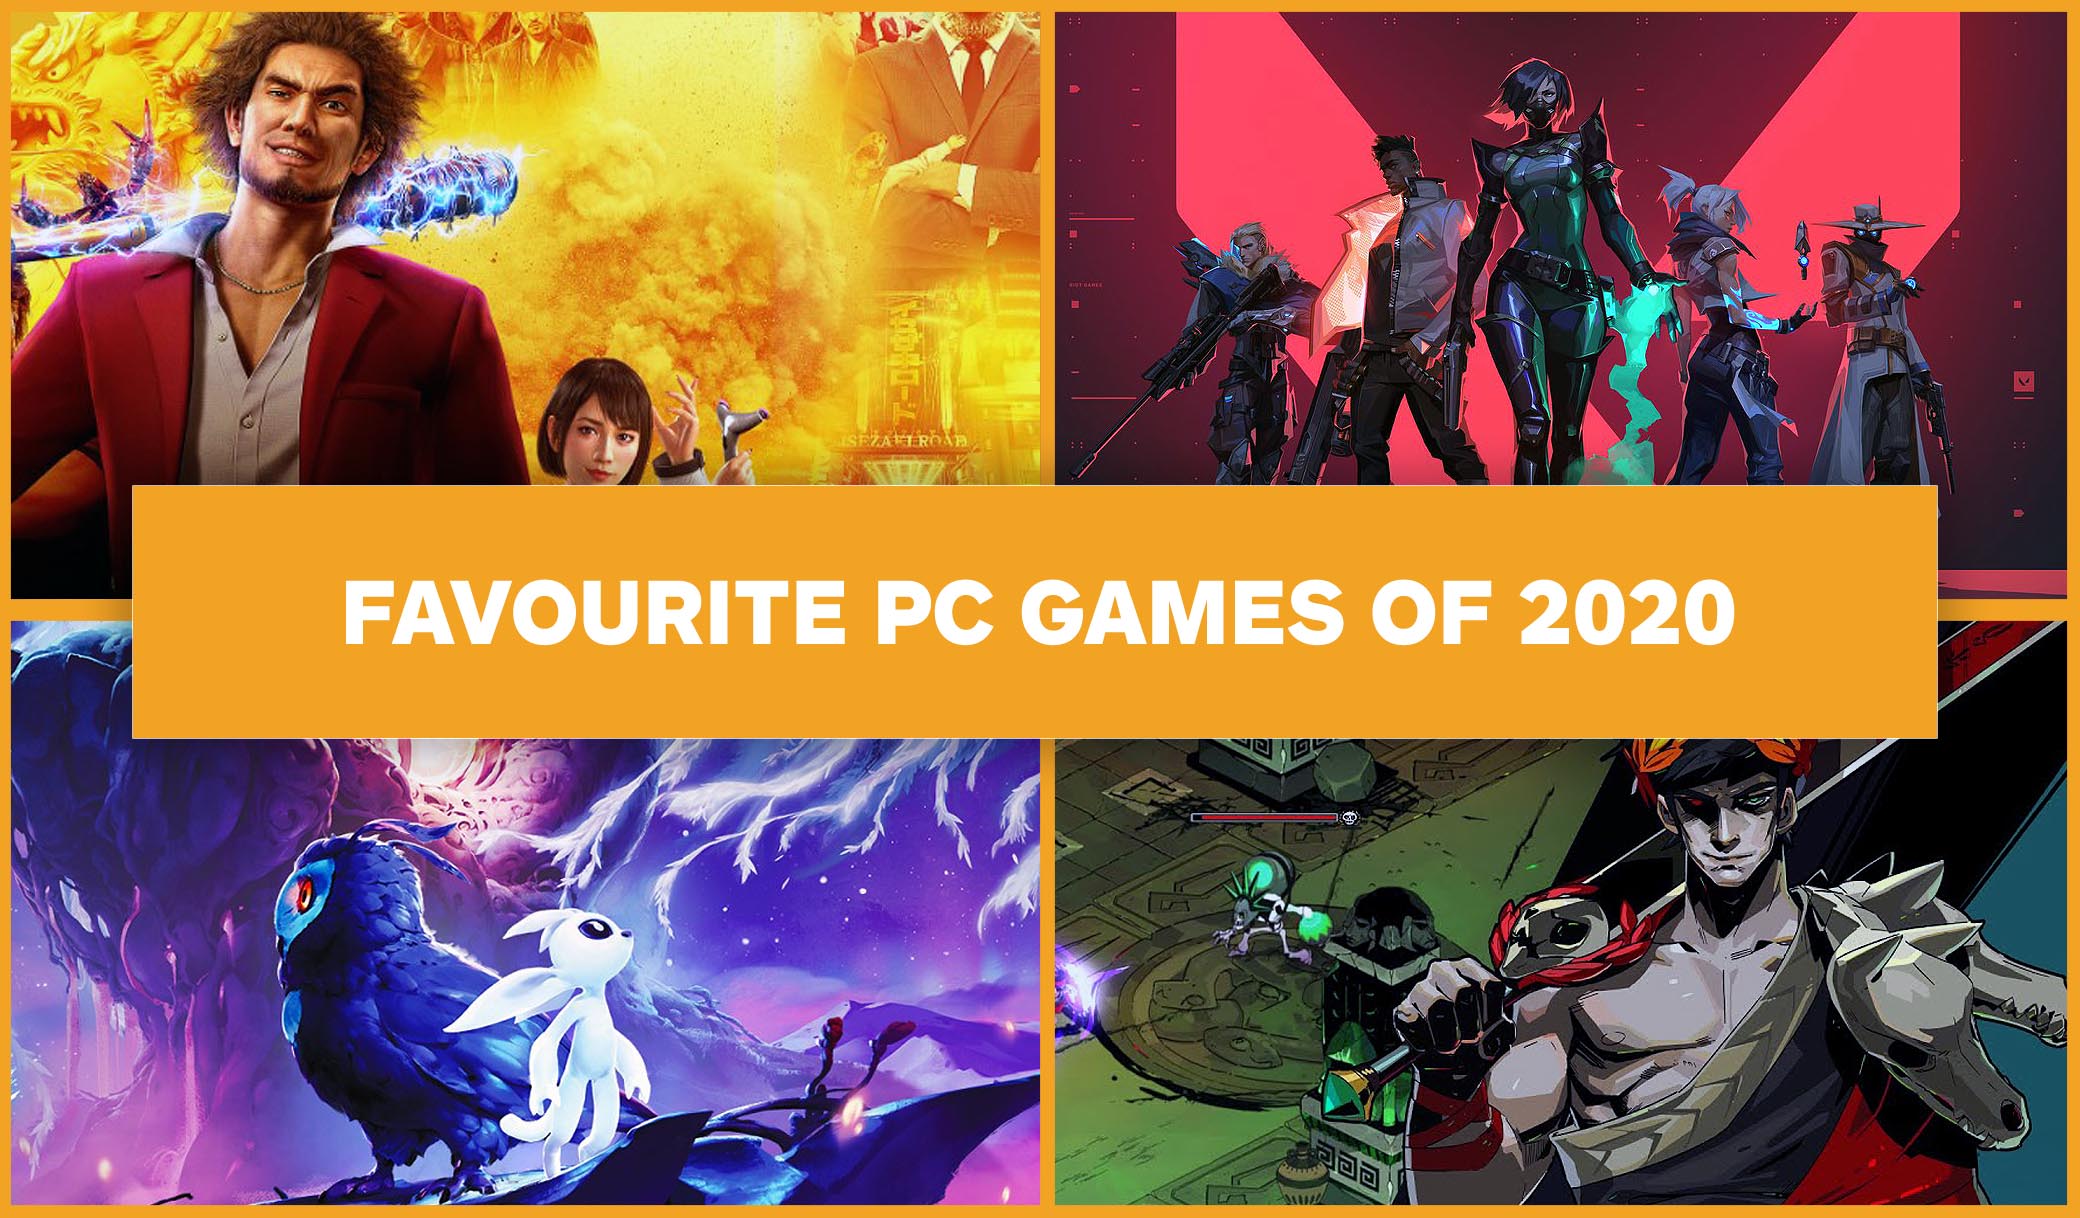 Best RPG games of 2020 so far